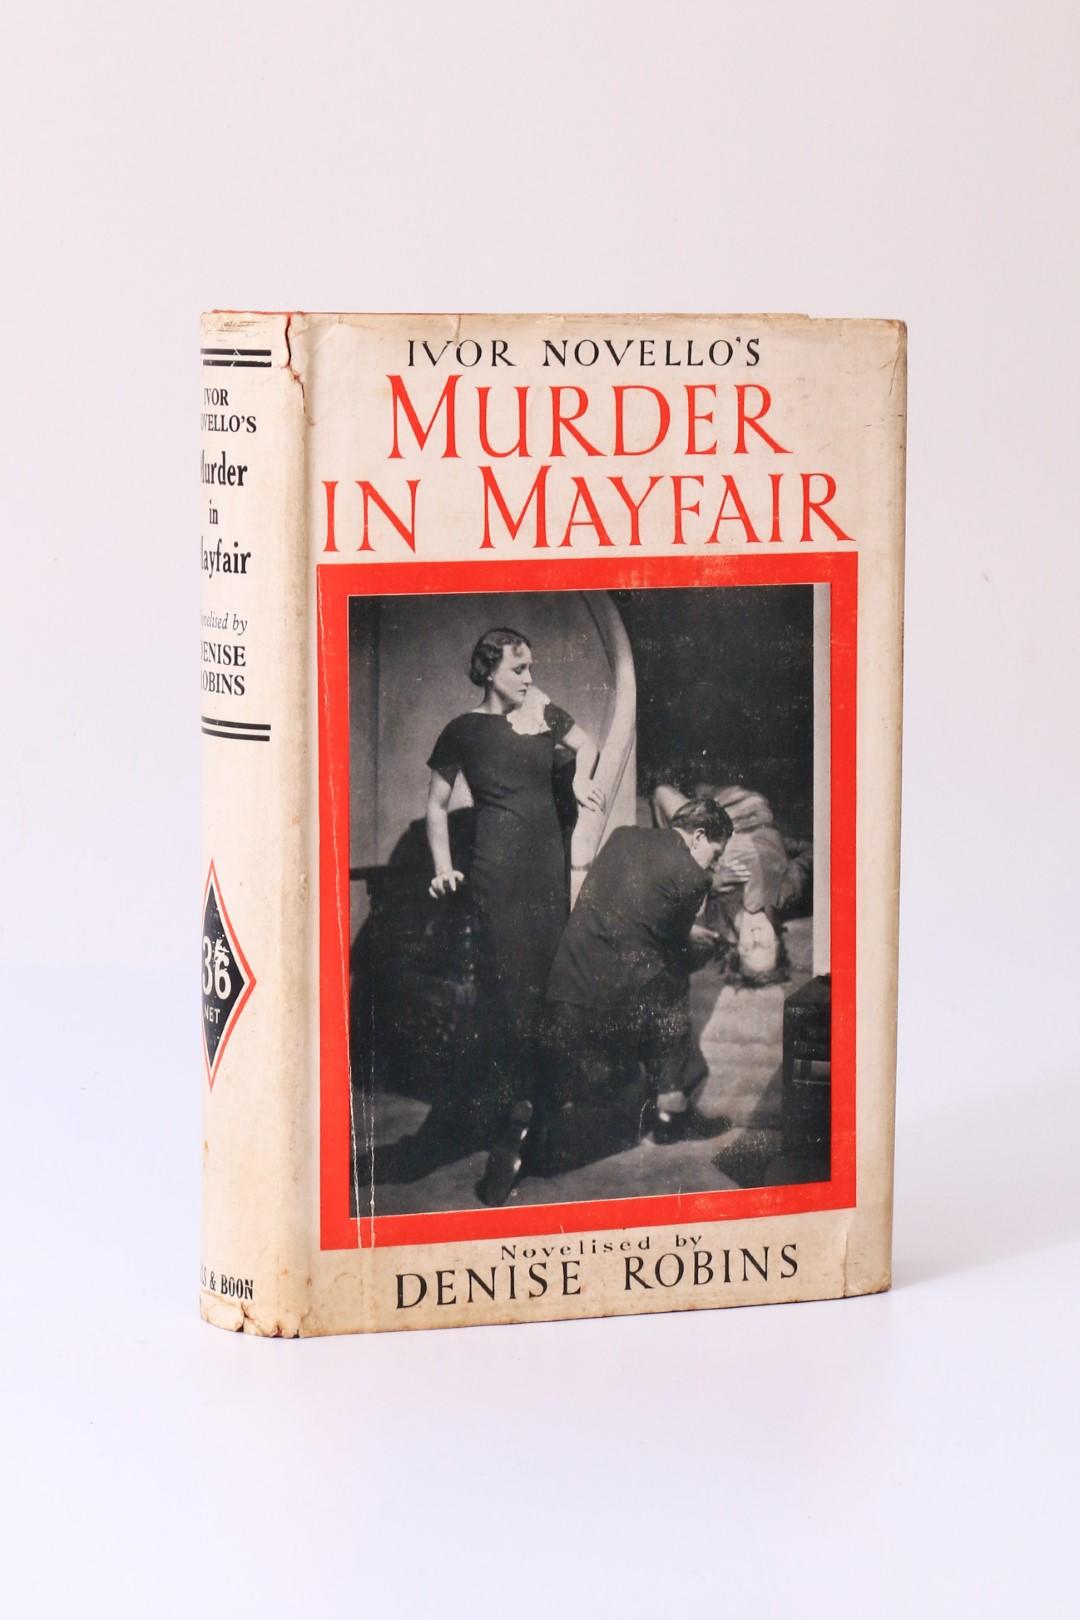 Denise Robins - Ivor Novello's Murder in Mayfair - Mills & Boon, 1935, First Edition.